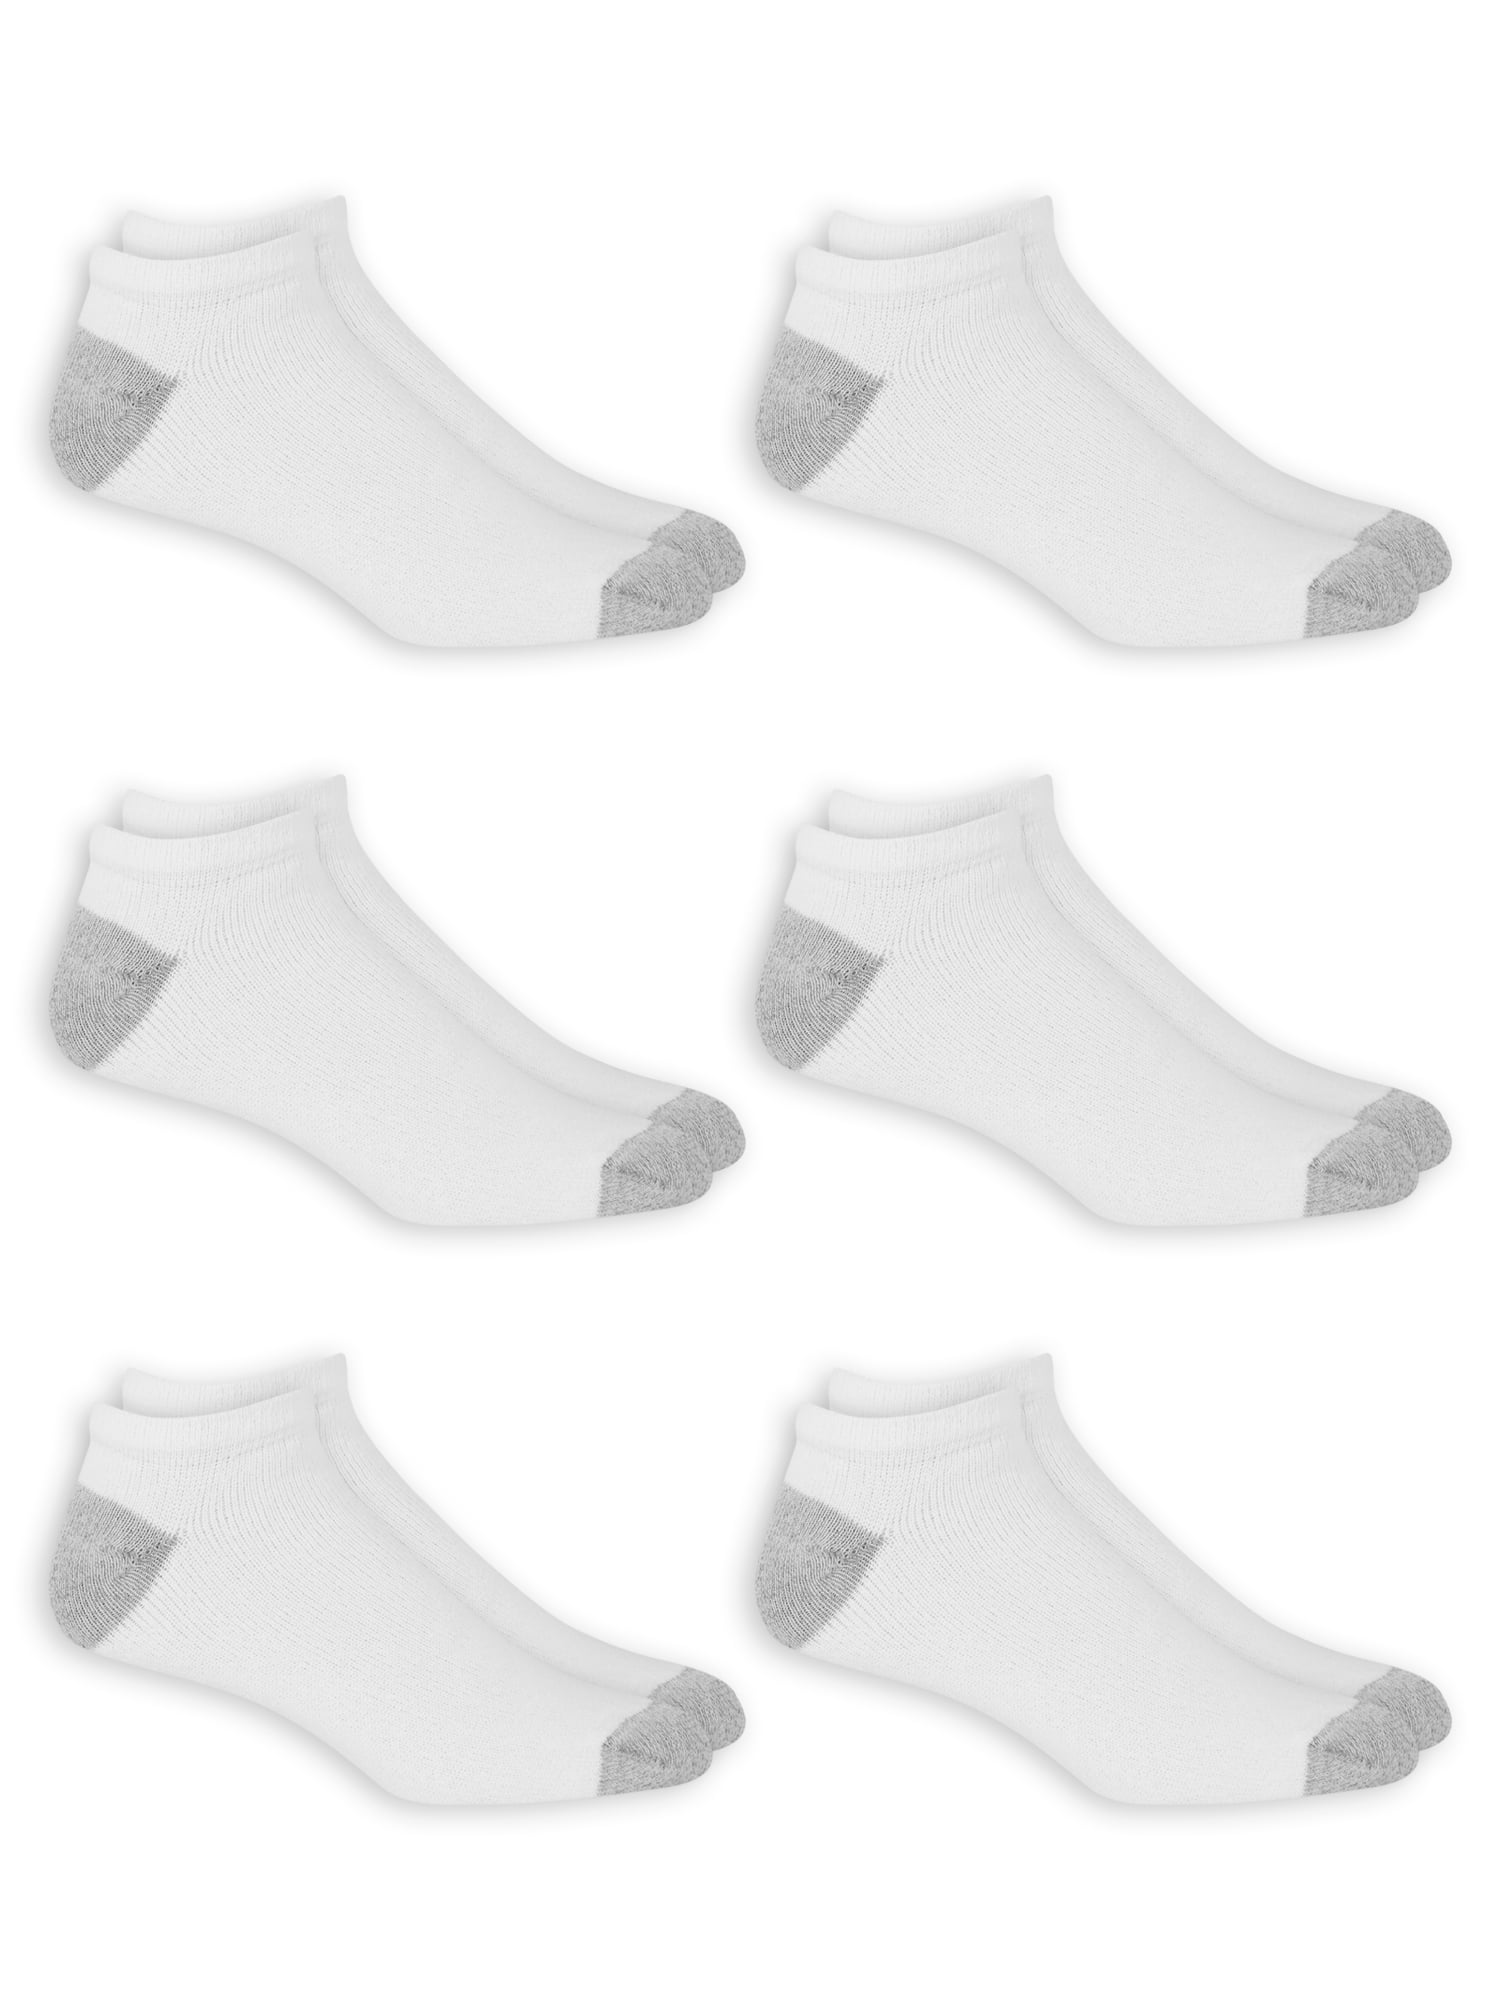 Men's Odor Resistant No Show Socks 6 Pack - Walmart.com